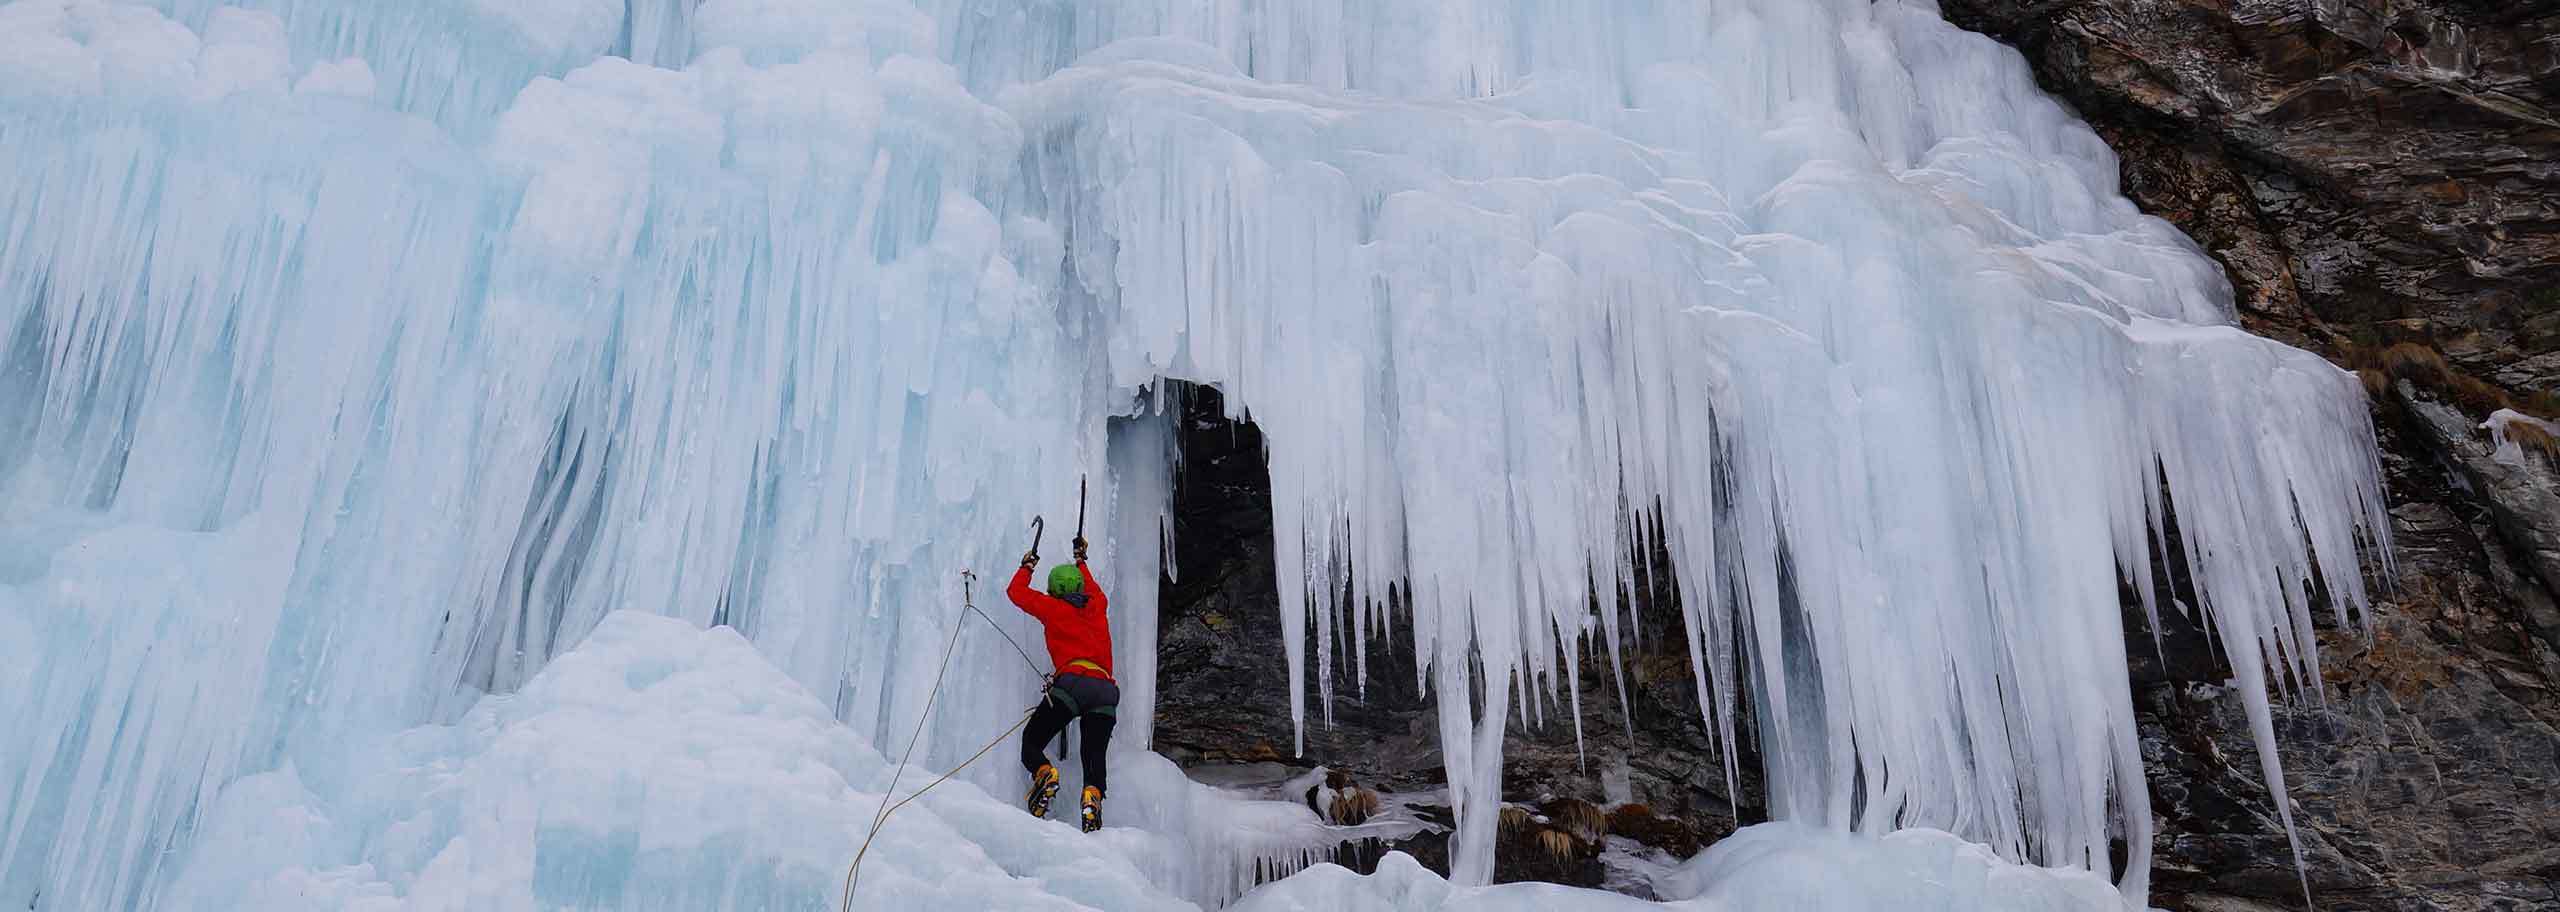 Ice Climbing in Auronzo di Cadore with a Mountain Guide